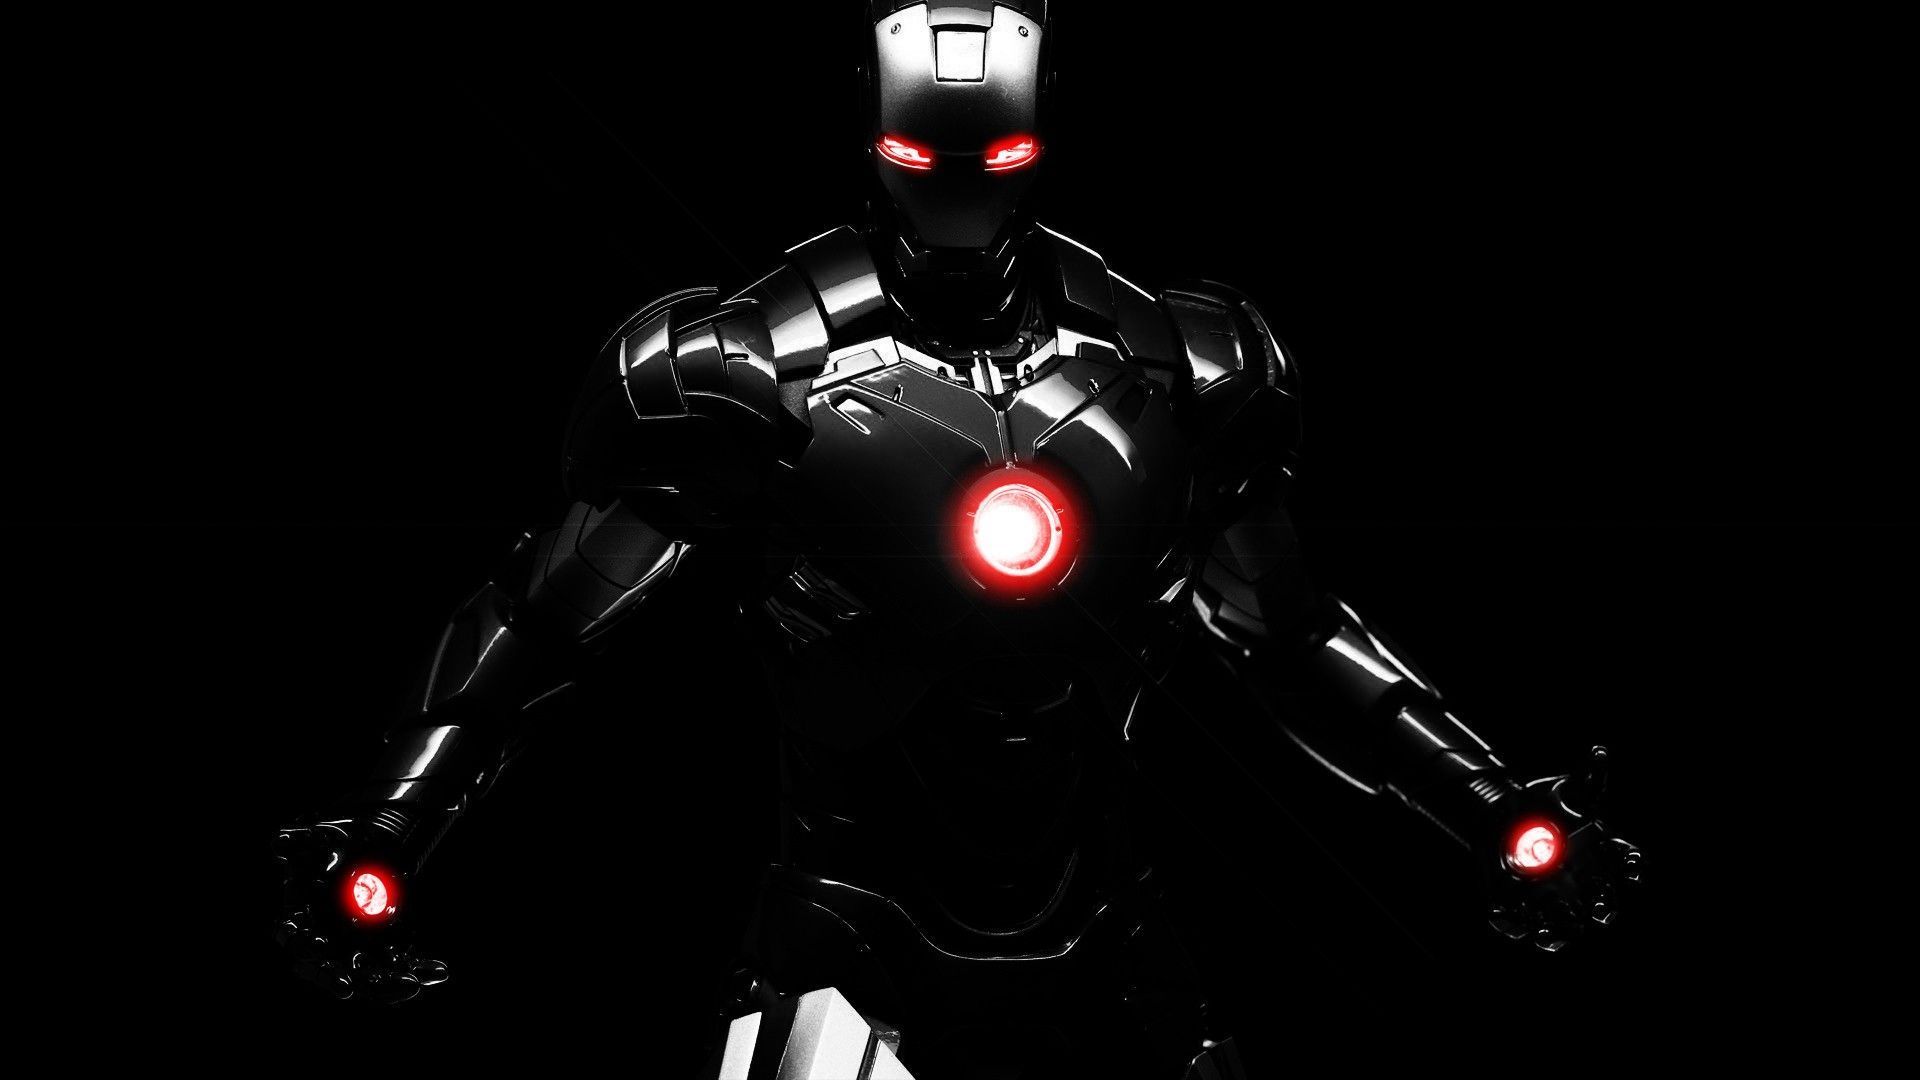 Desktop Wallpaper High Definition in 1080p with Iron Man Photos